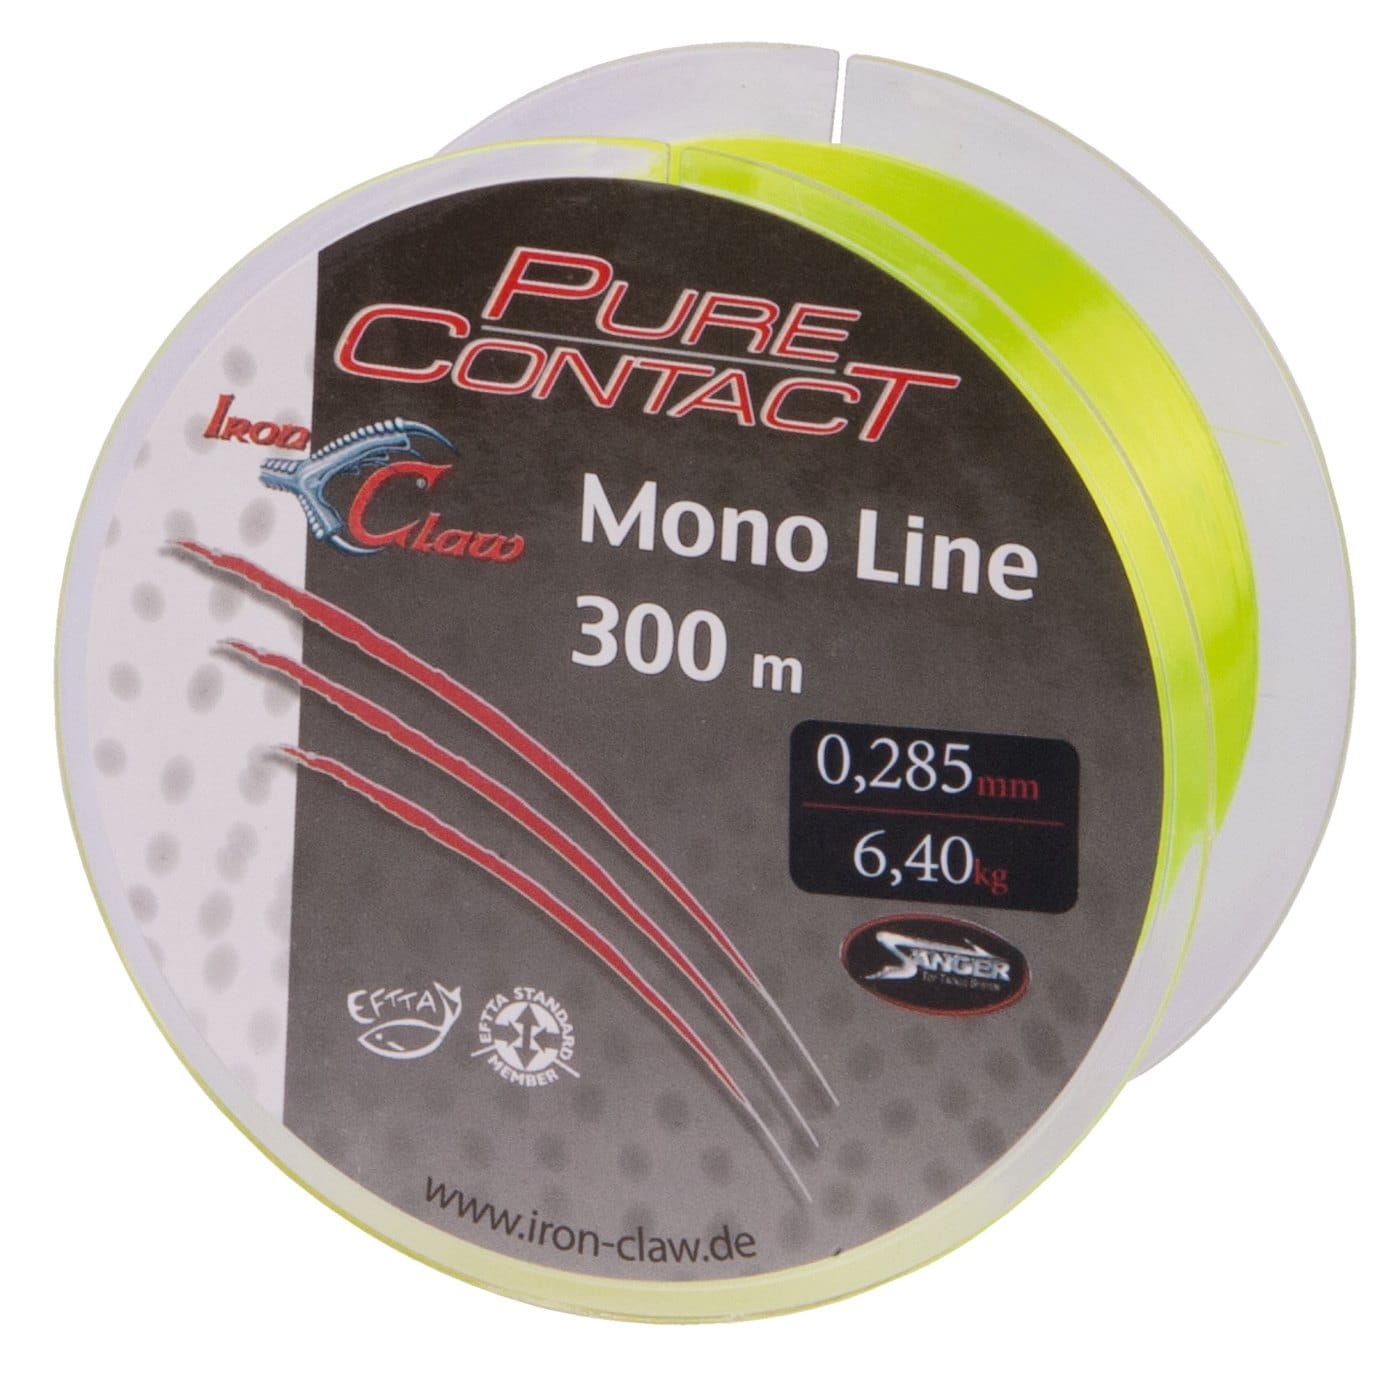 Iron Claw Pure Contact Mono Line 300m